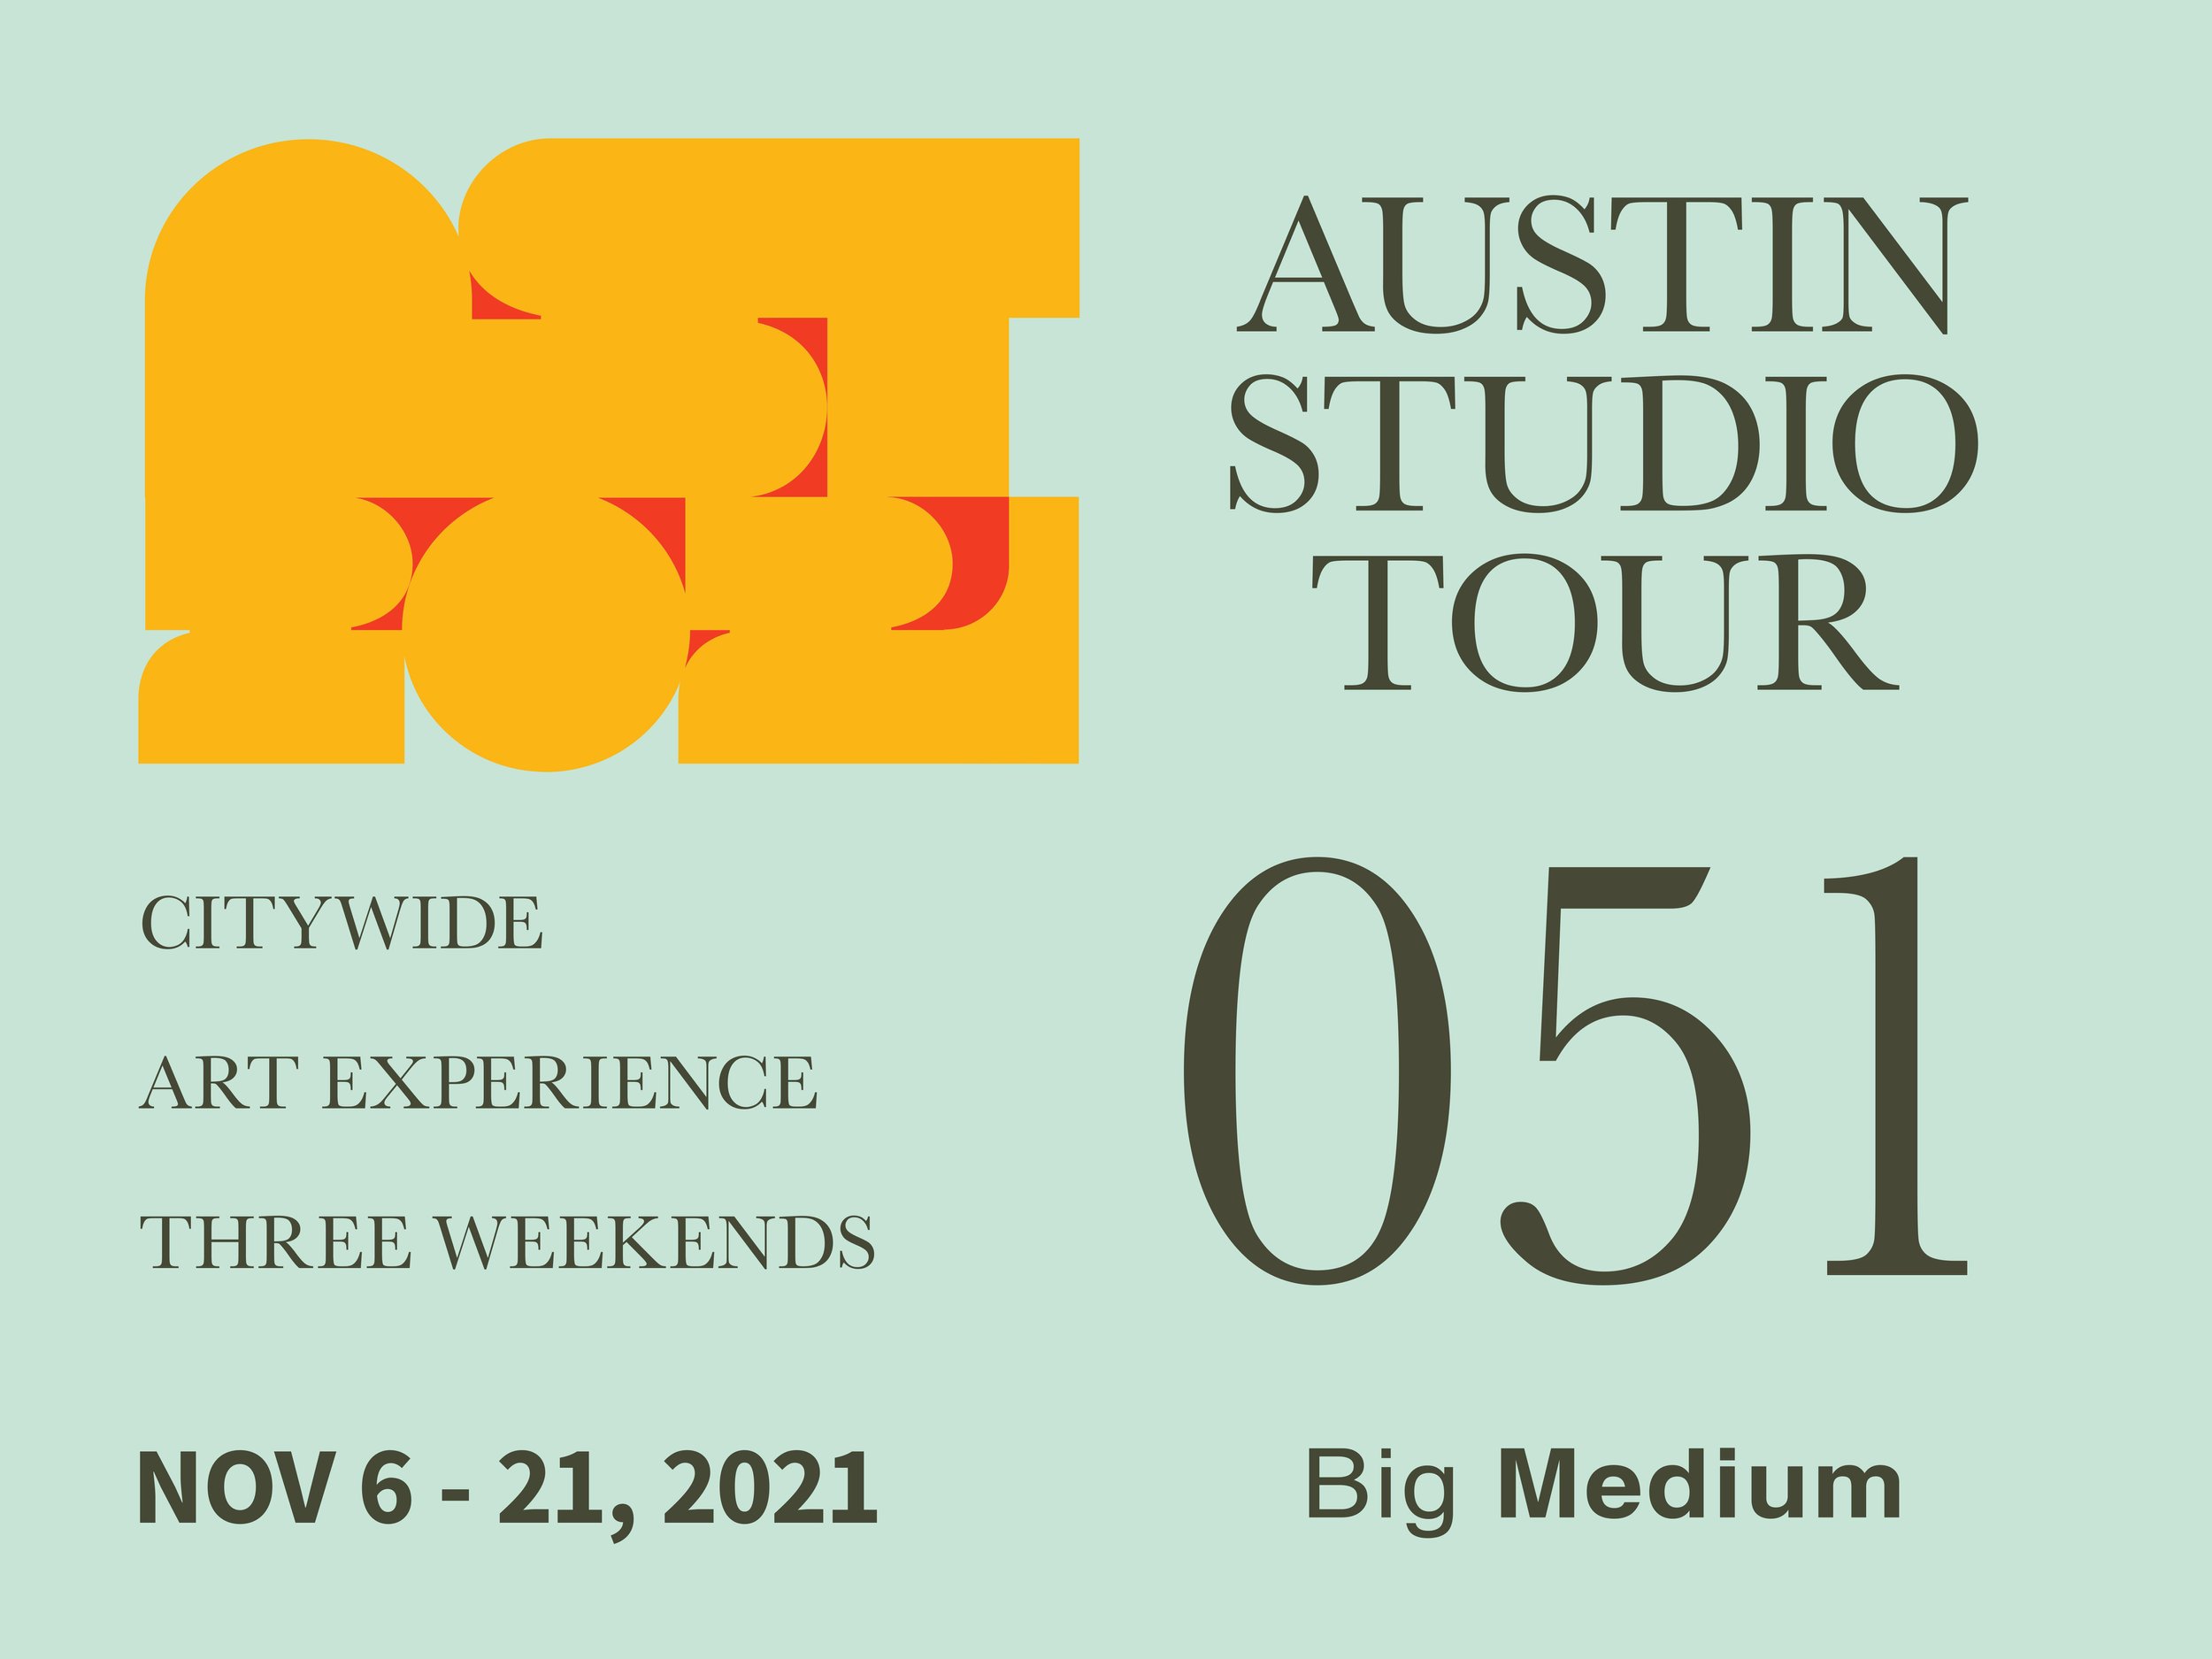 austin studio tour 2023 dates